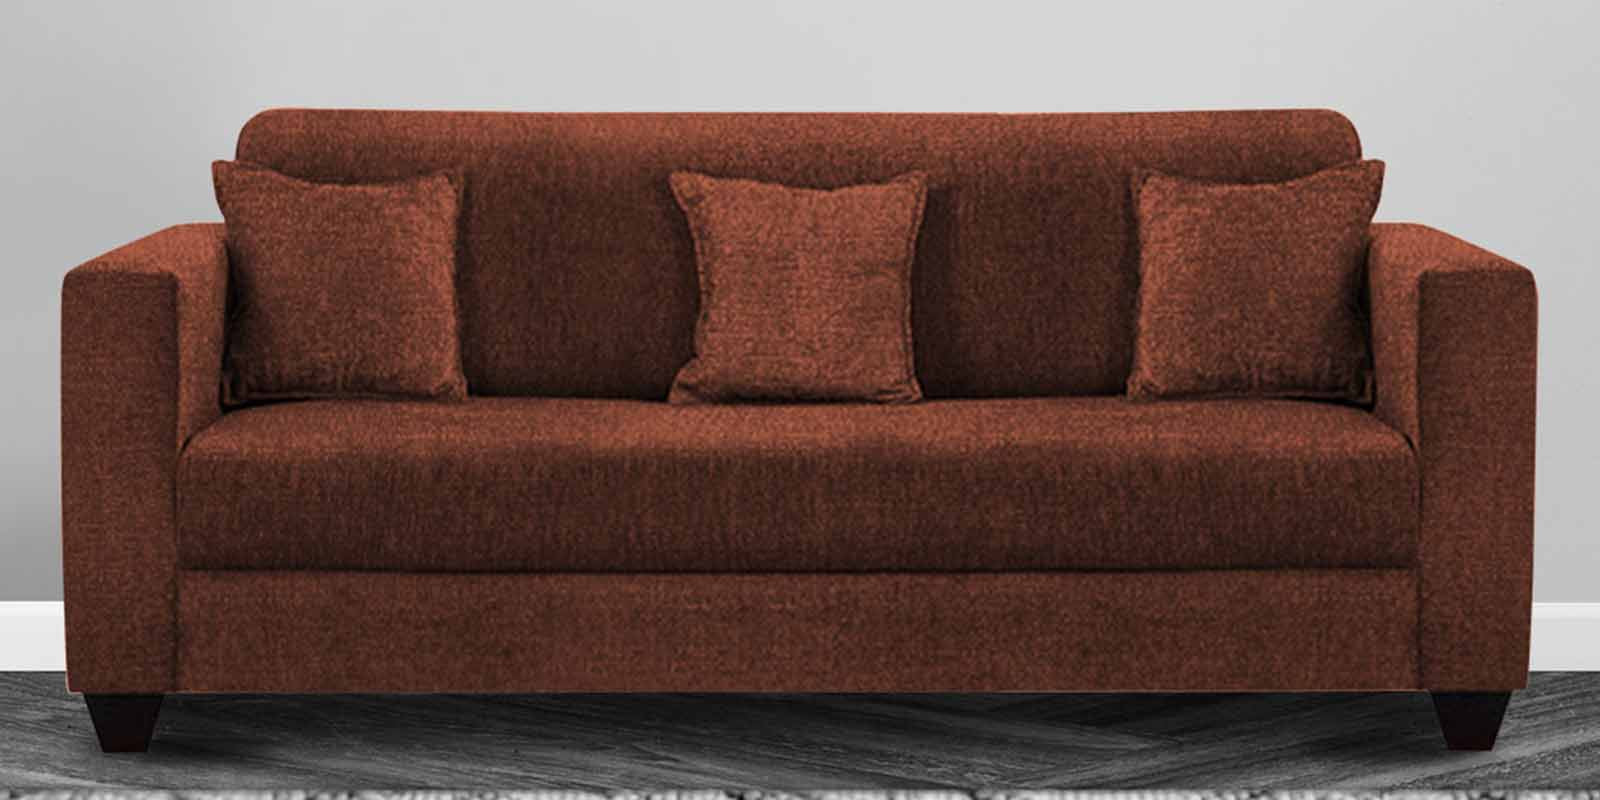 Nebula Fabric 3 Seater Sofa in Coffee Brown Colour